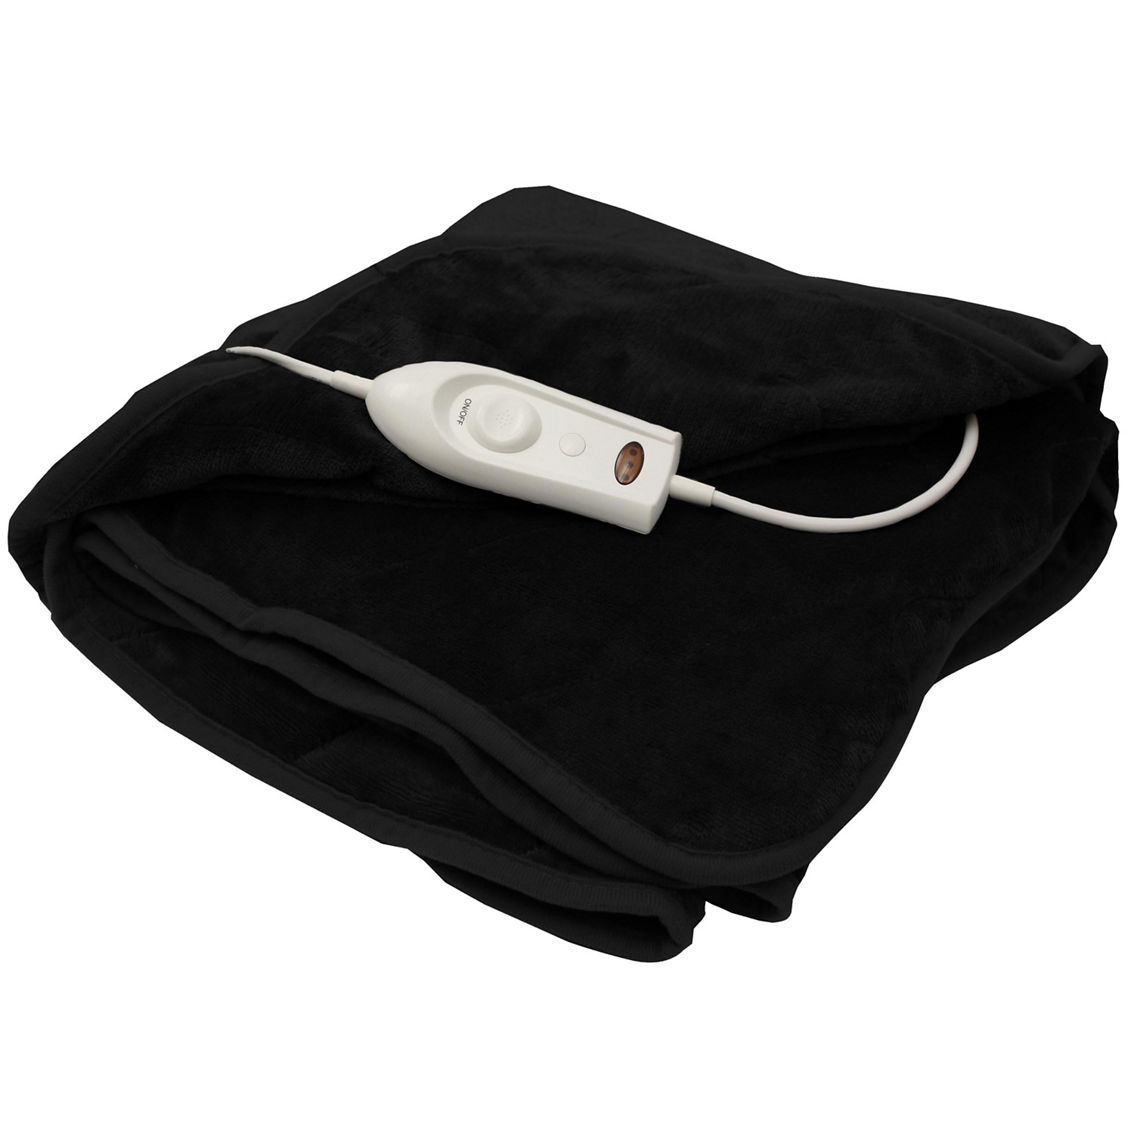 Heatology Heated Blanket - Image 3 of 4